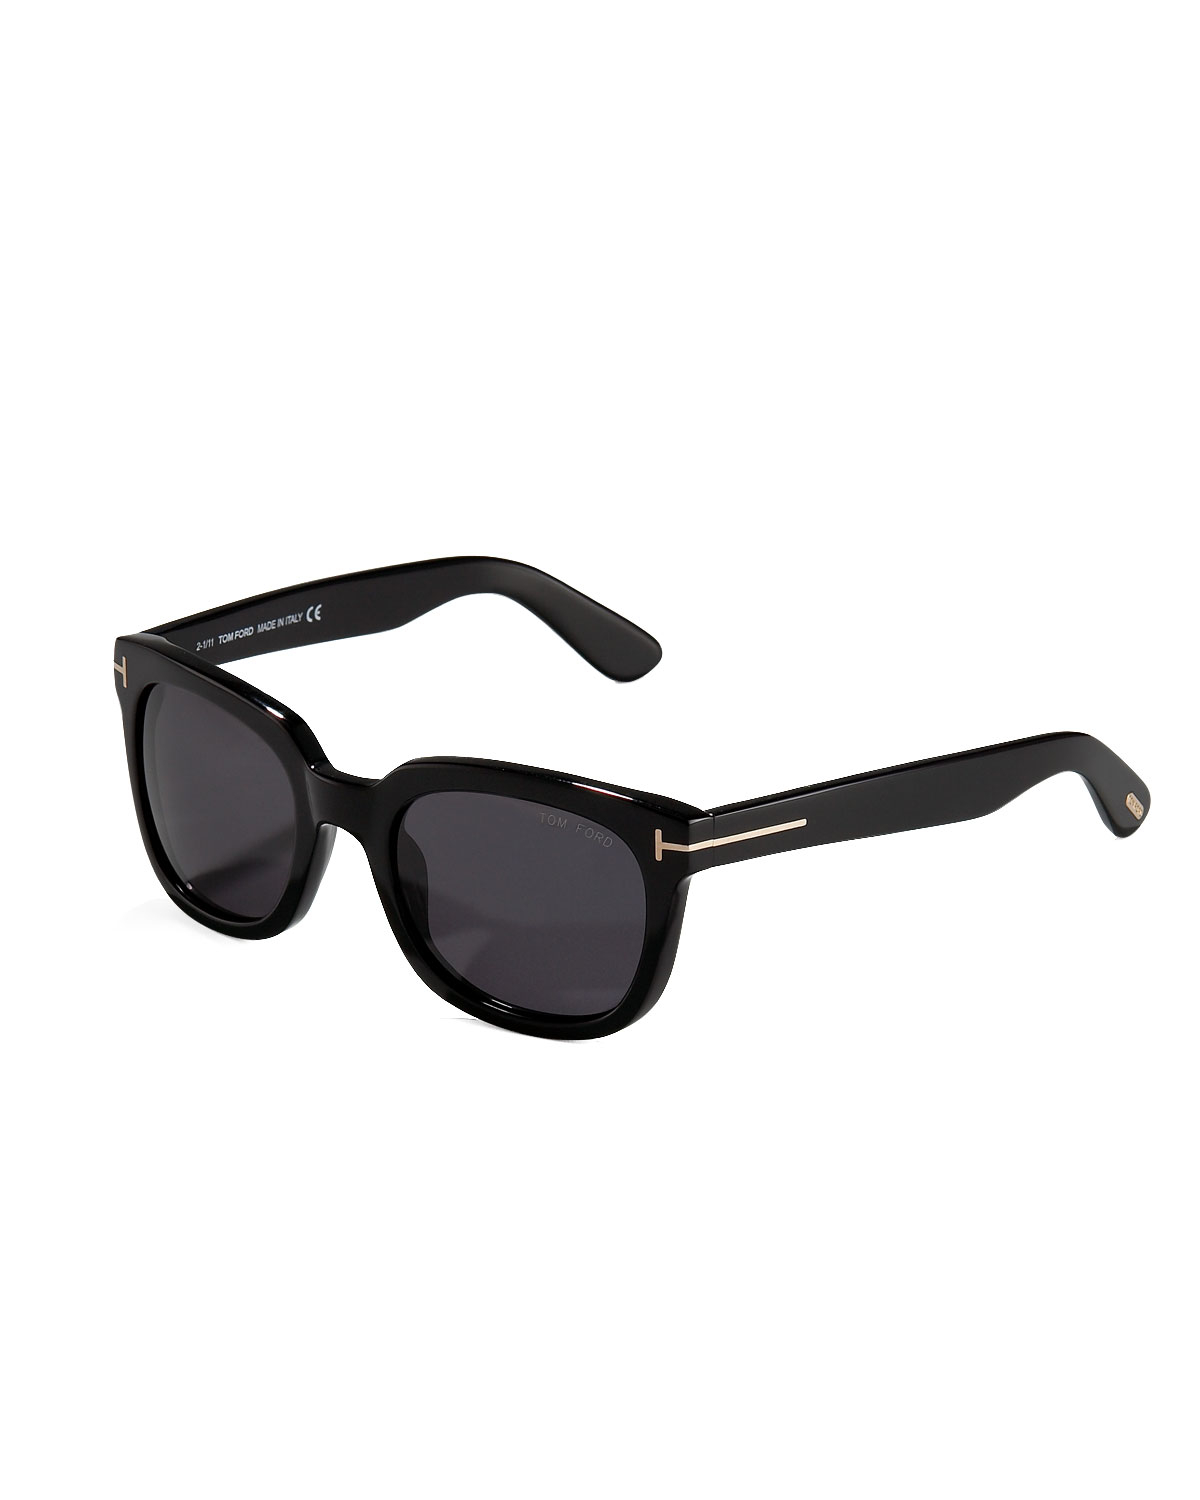 Tom ford max black sunglasses #9